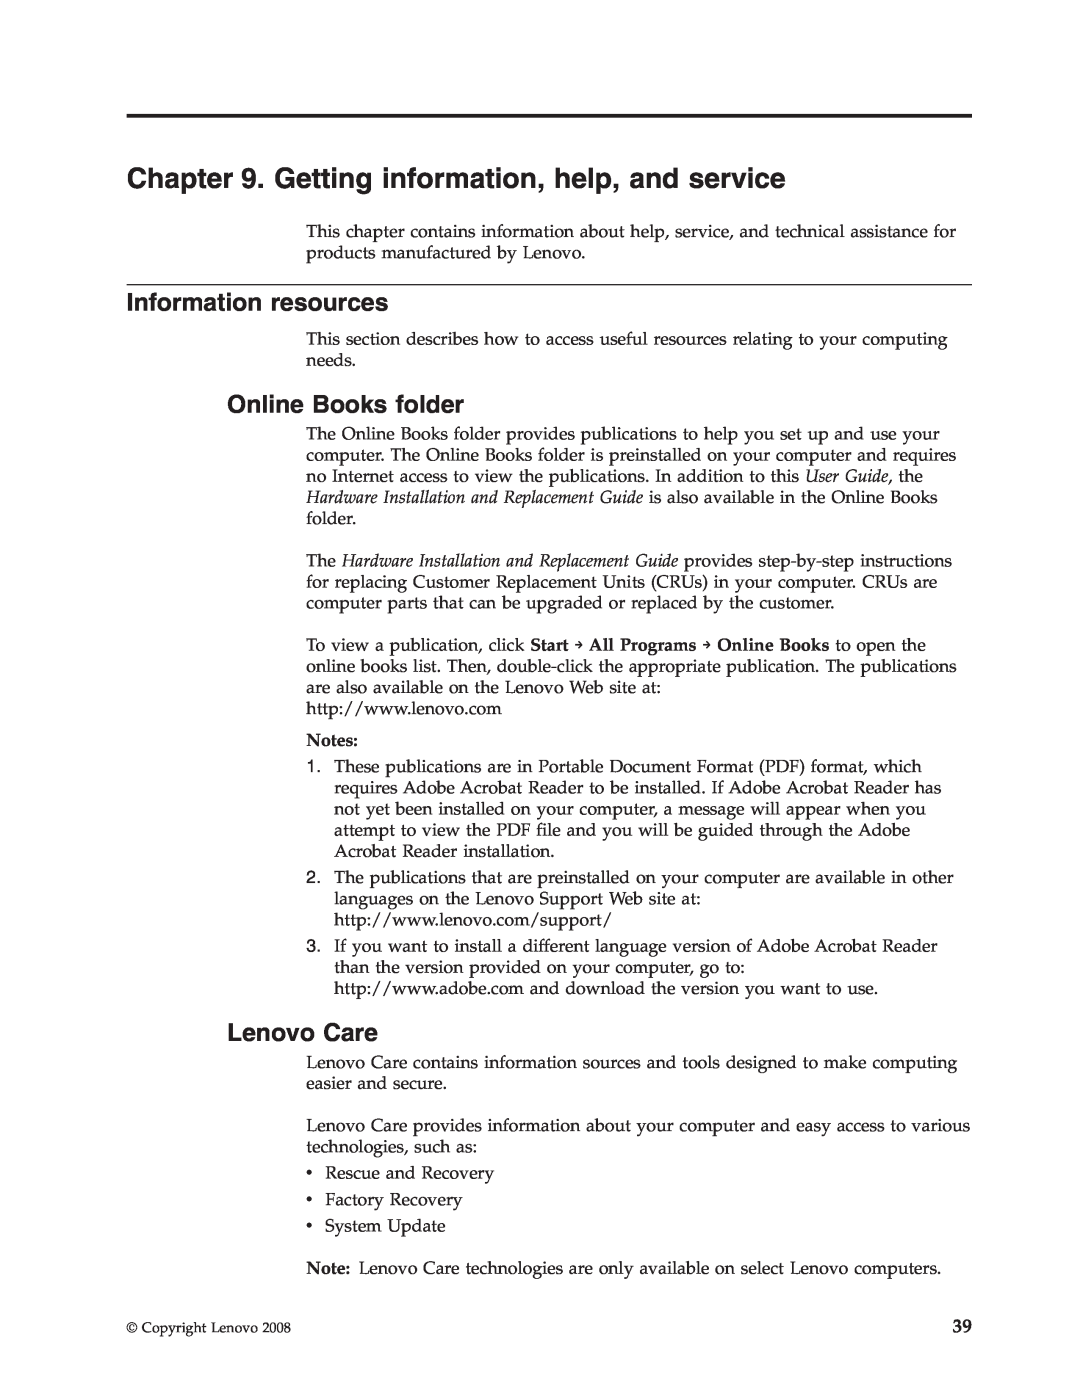 Lenovo 6306 manual Getting information, help, and service, Information resources, Online Books folder, Lenovo Care 